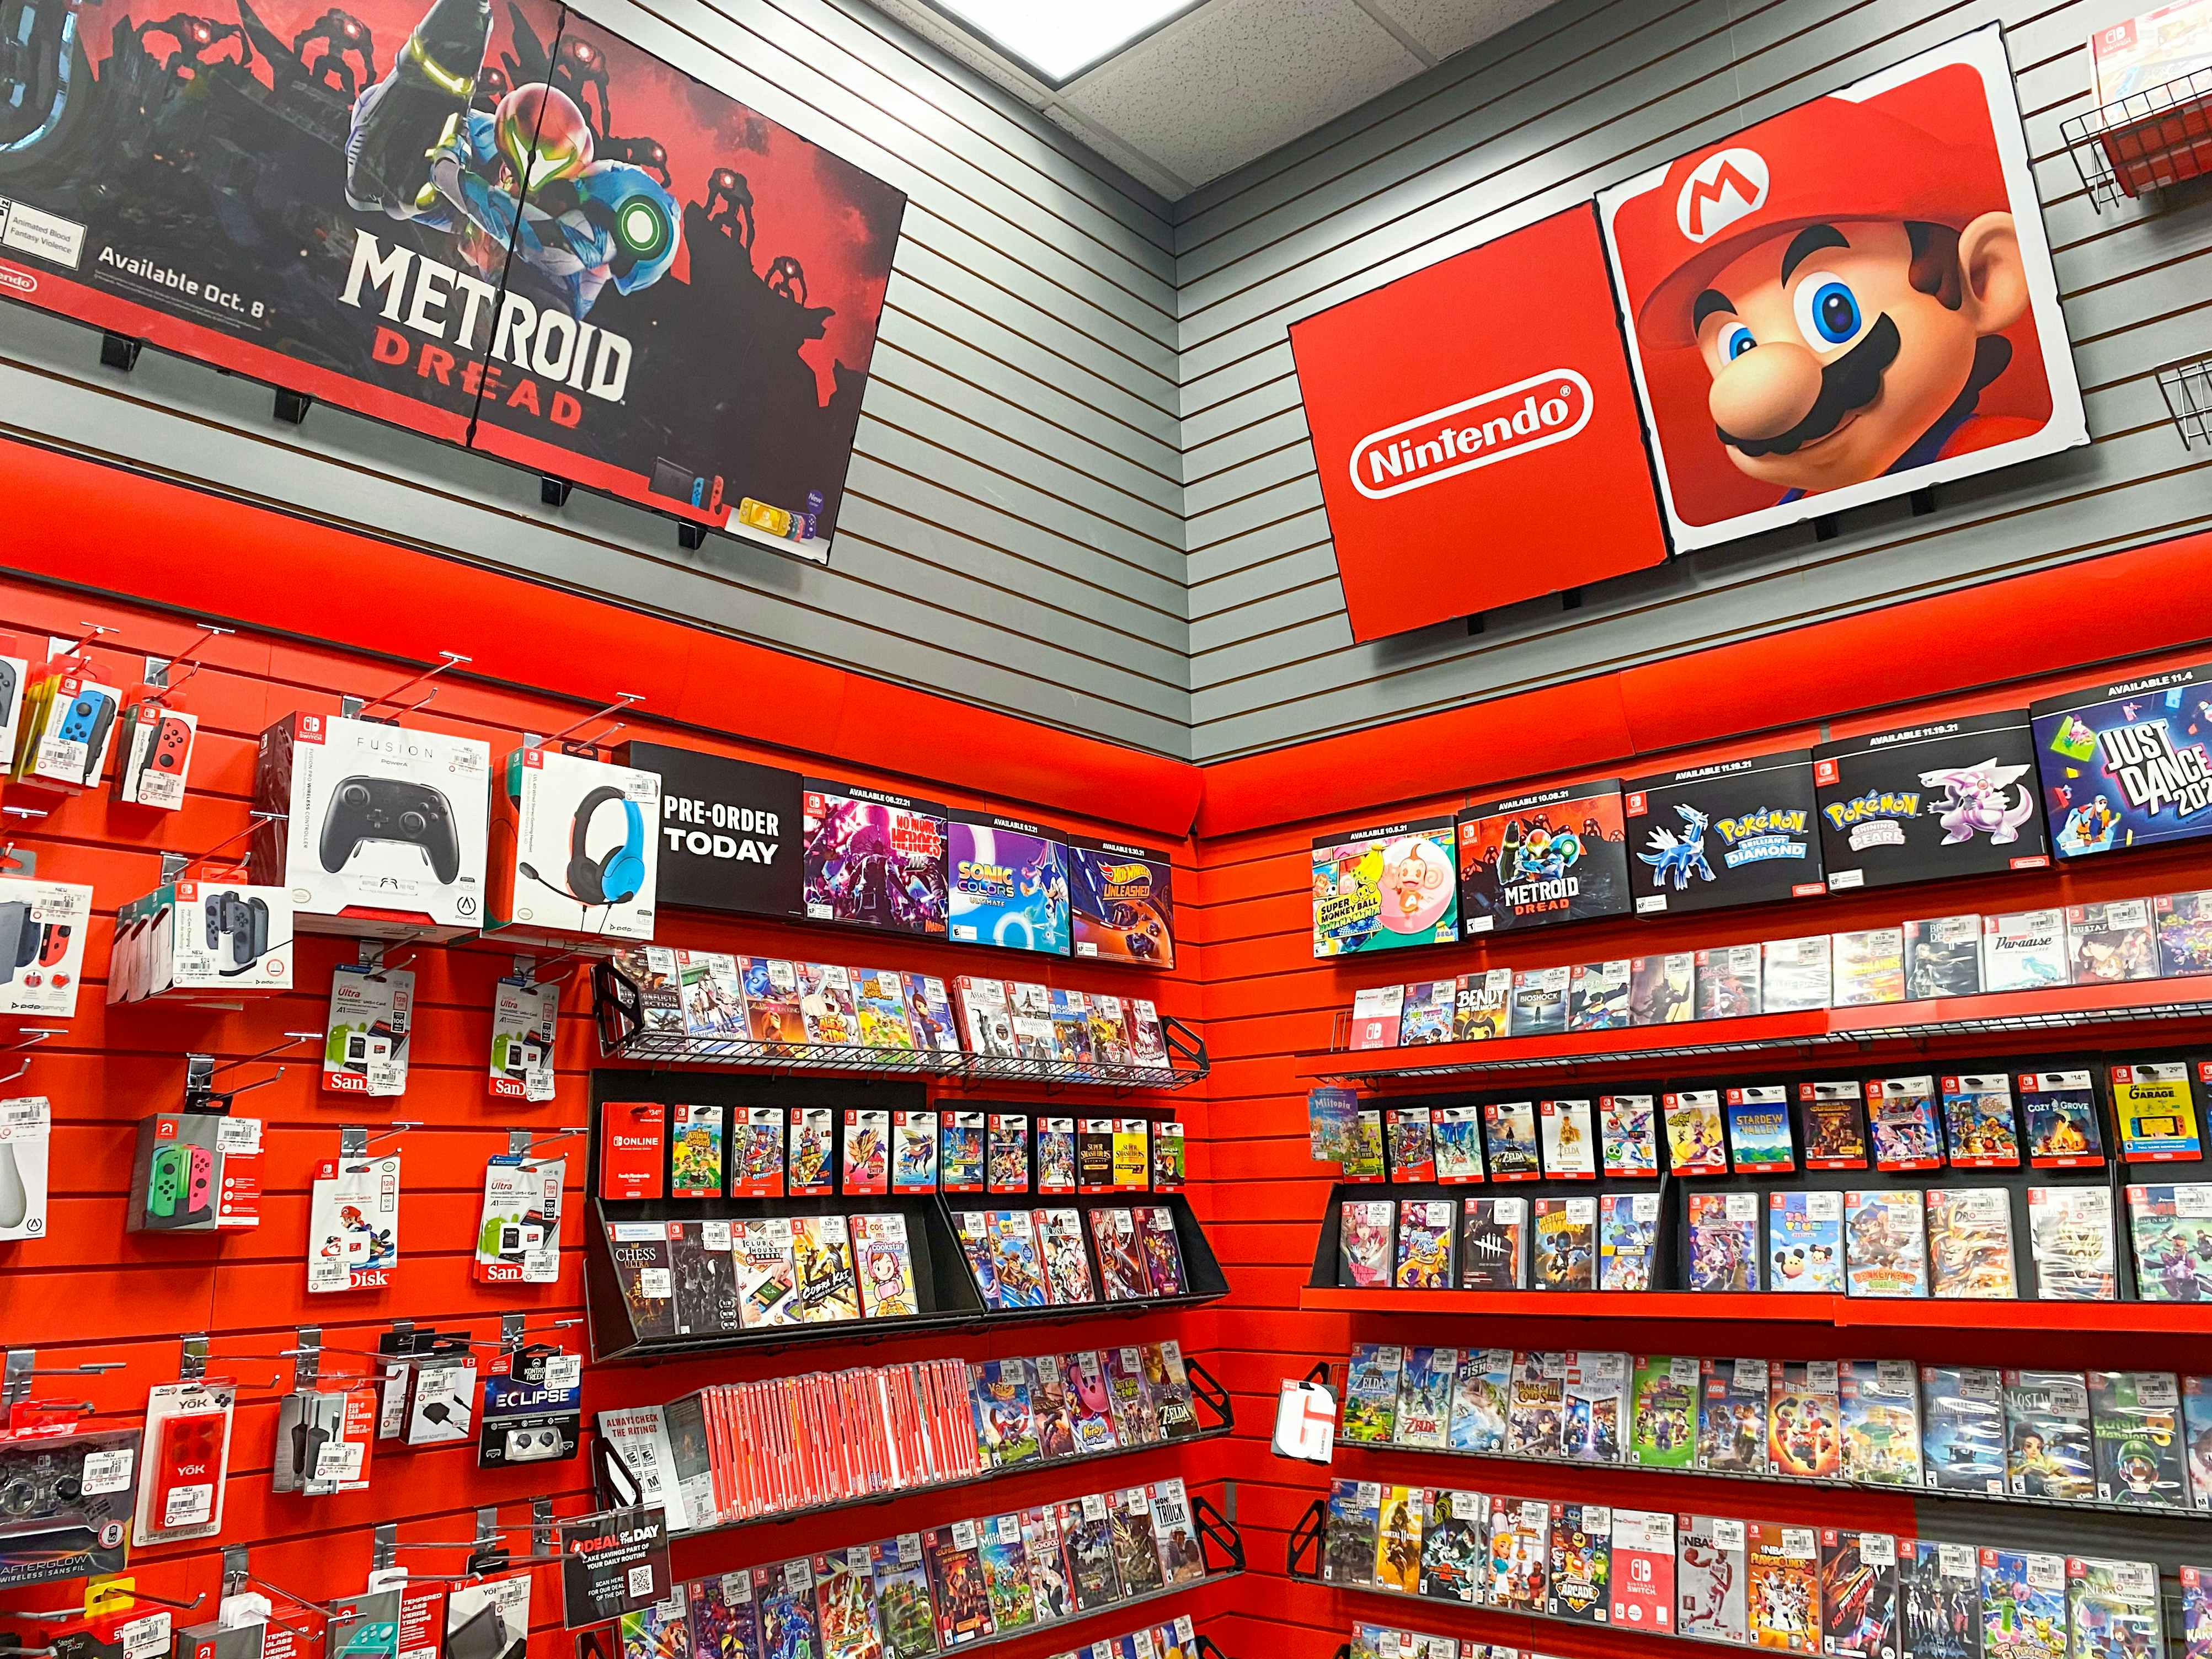 Nintendo Switch Black Friday Deals 2022: Best Bundle, Game Sales, Discounts  – StyleCaster